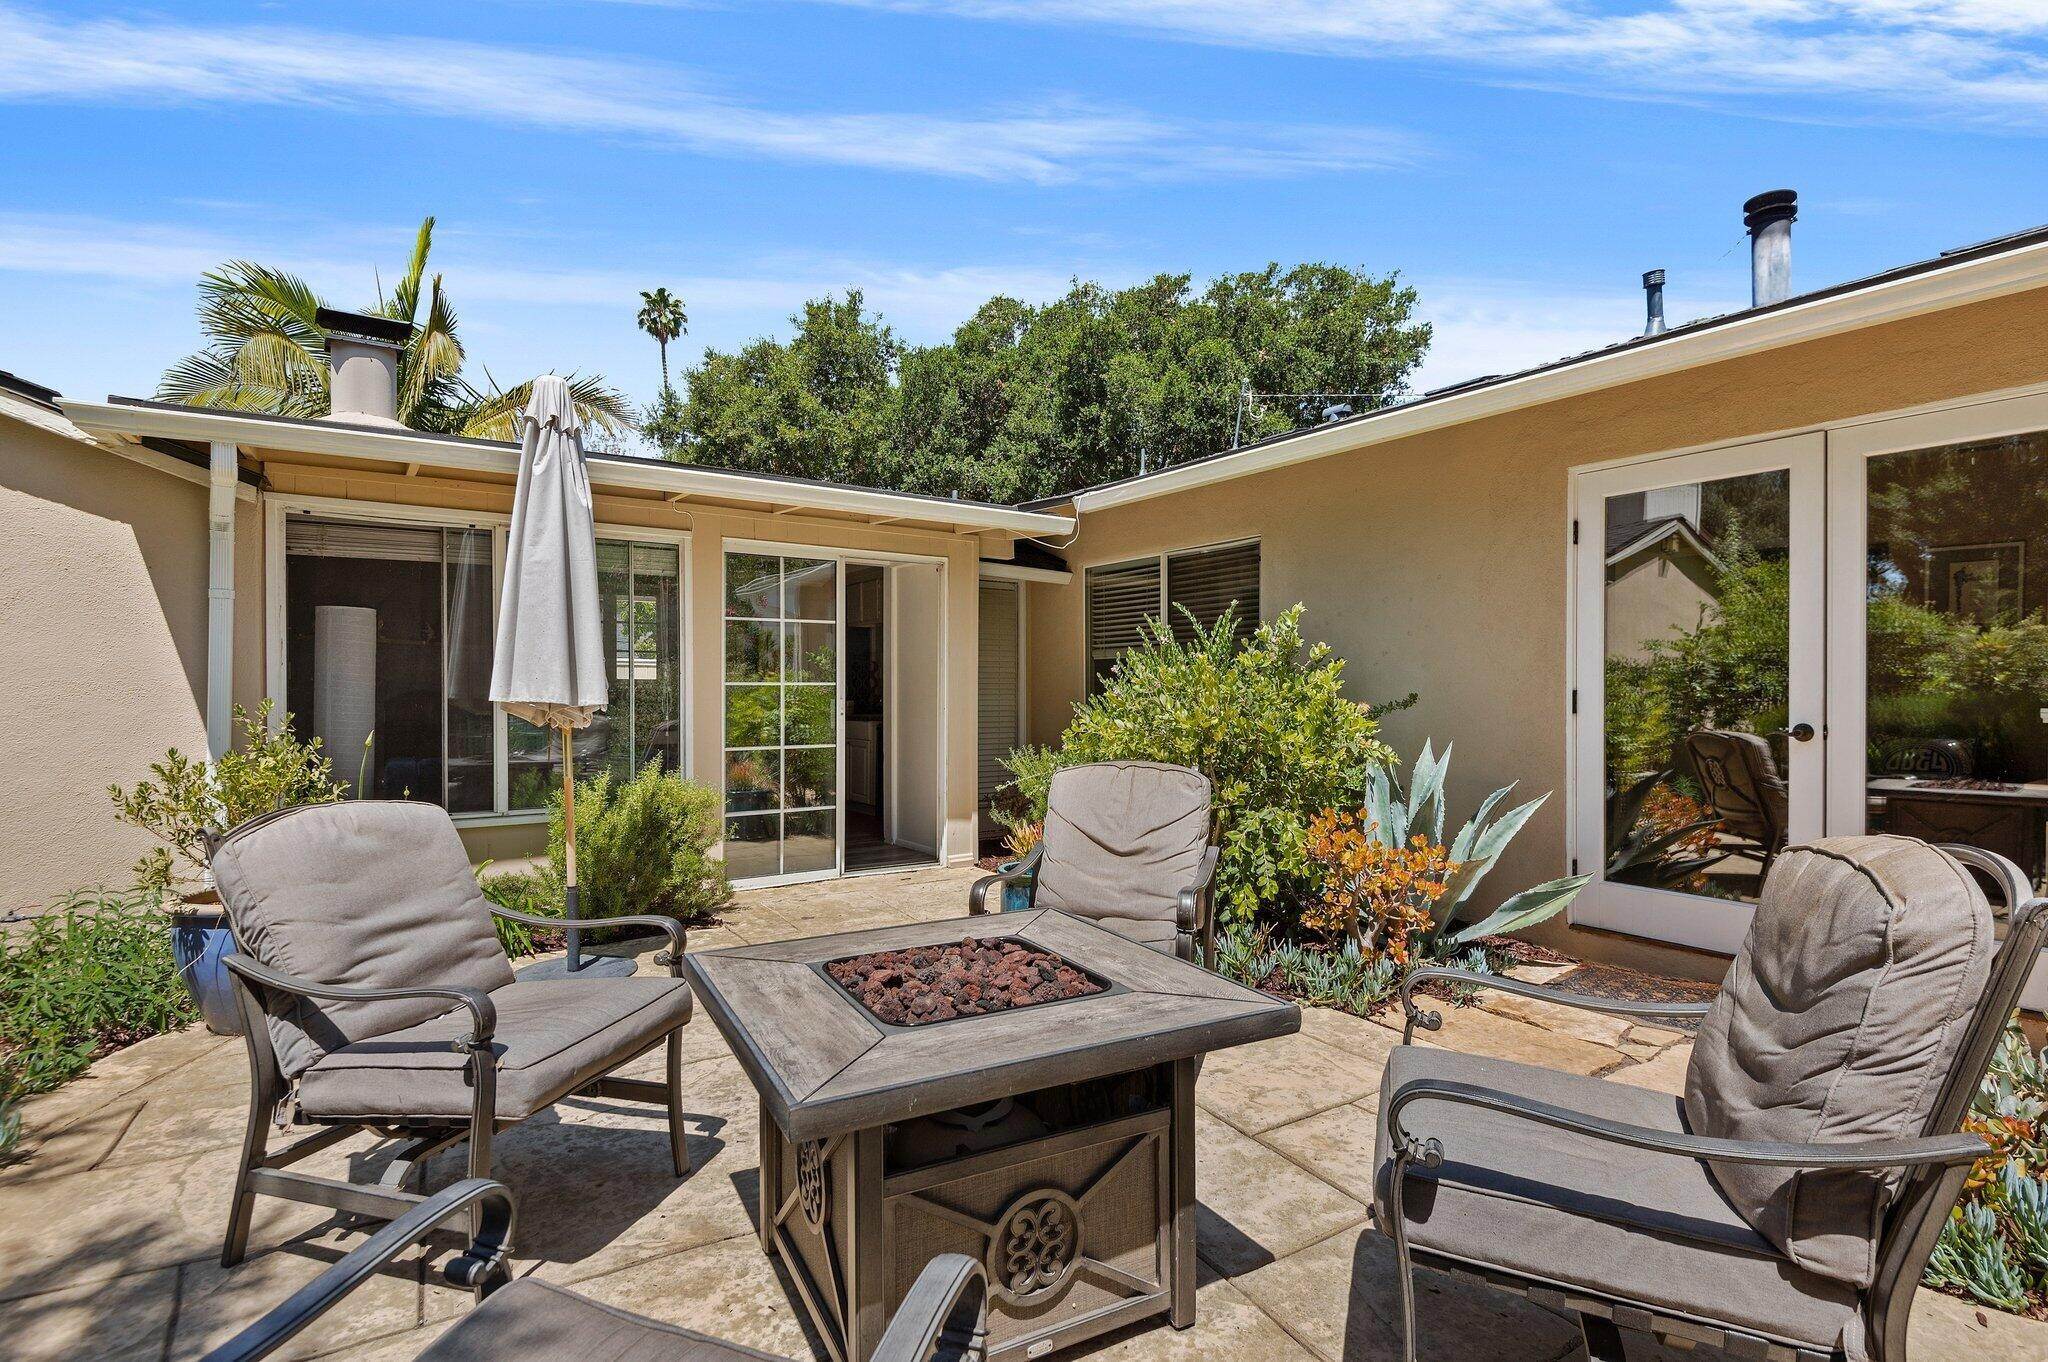 27. Estate for Sale at 2805 Foothill Road Santa Barbara, California 93105 United States